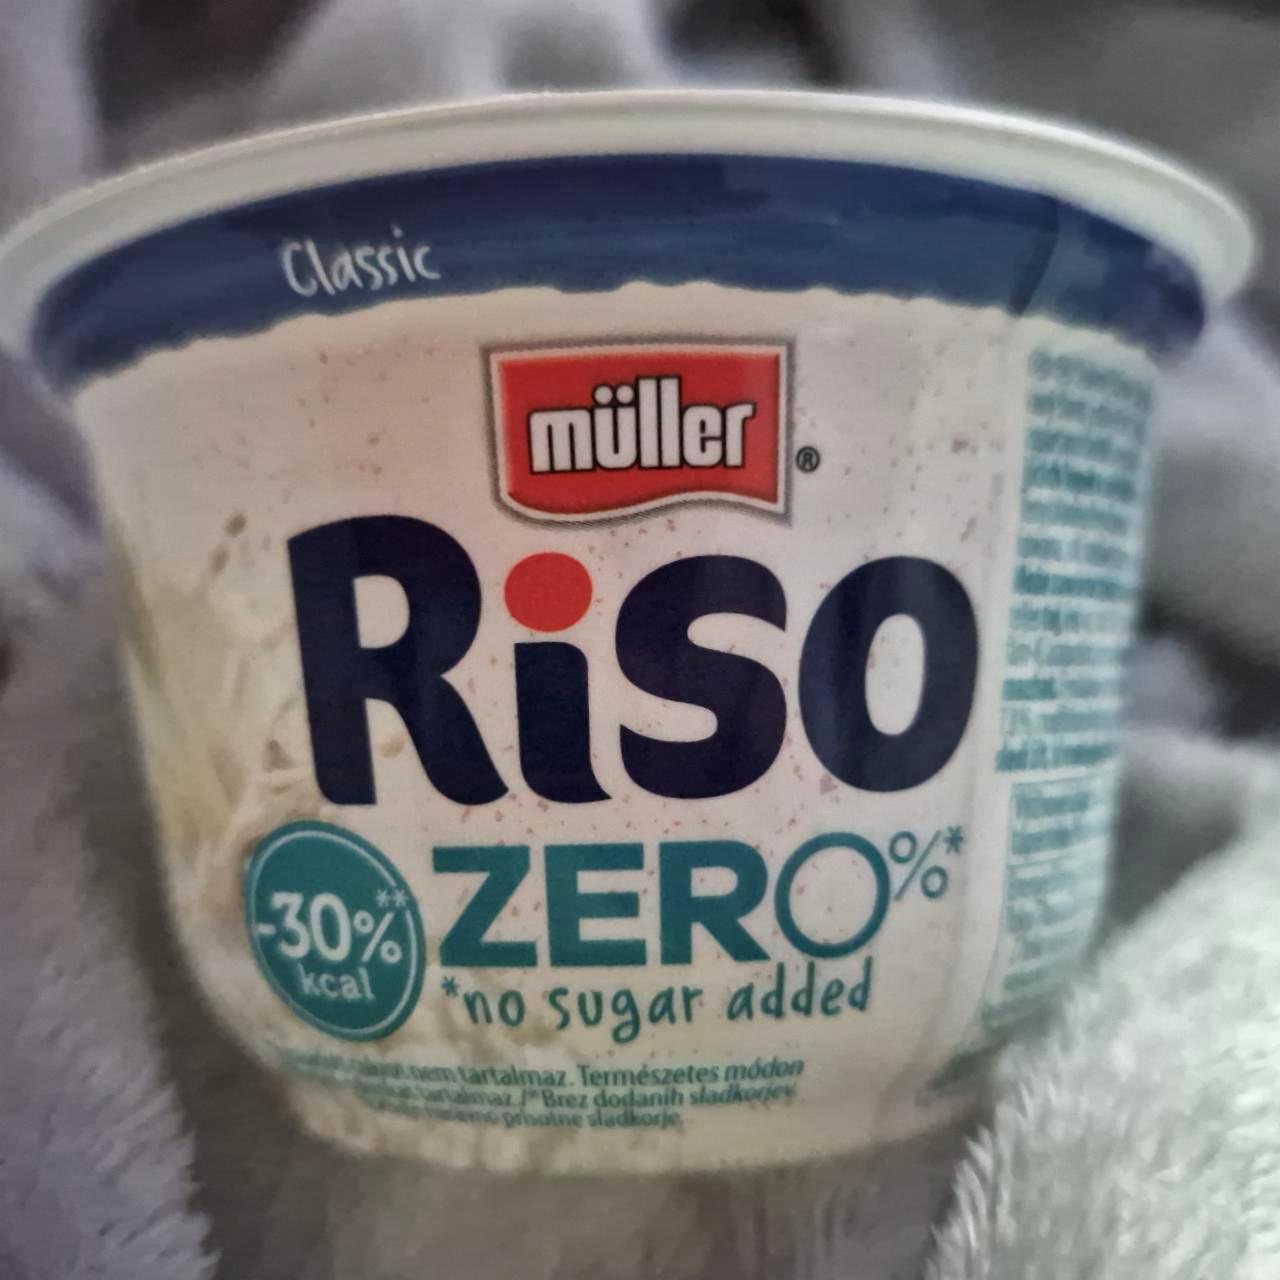 Képek - Riso Classic Zero Müller